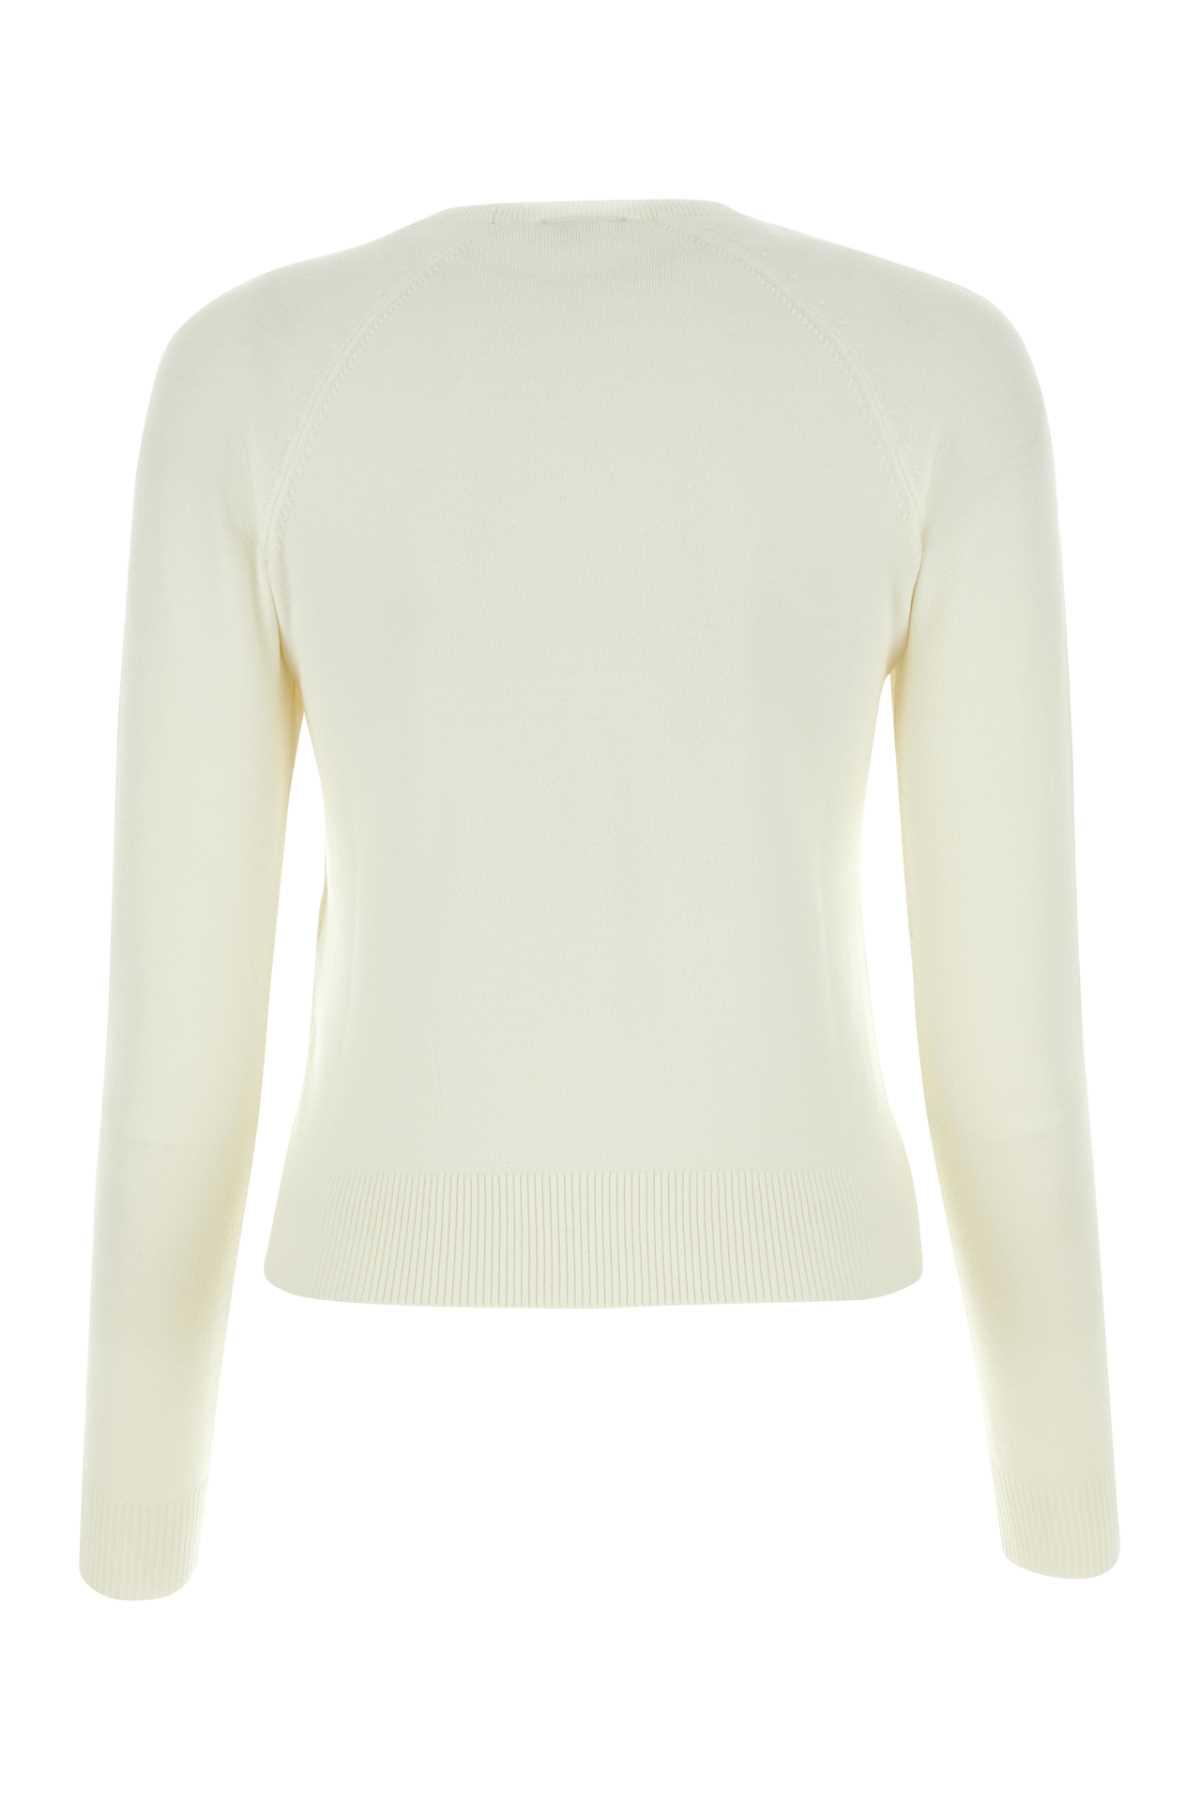 Patou White Wool Blend Sweater